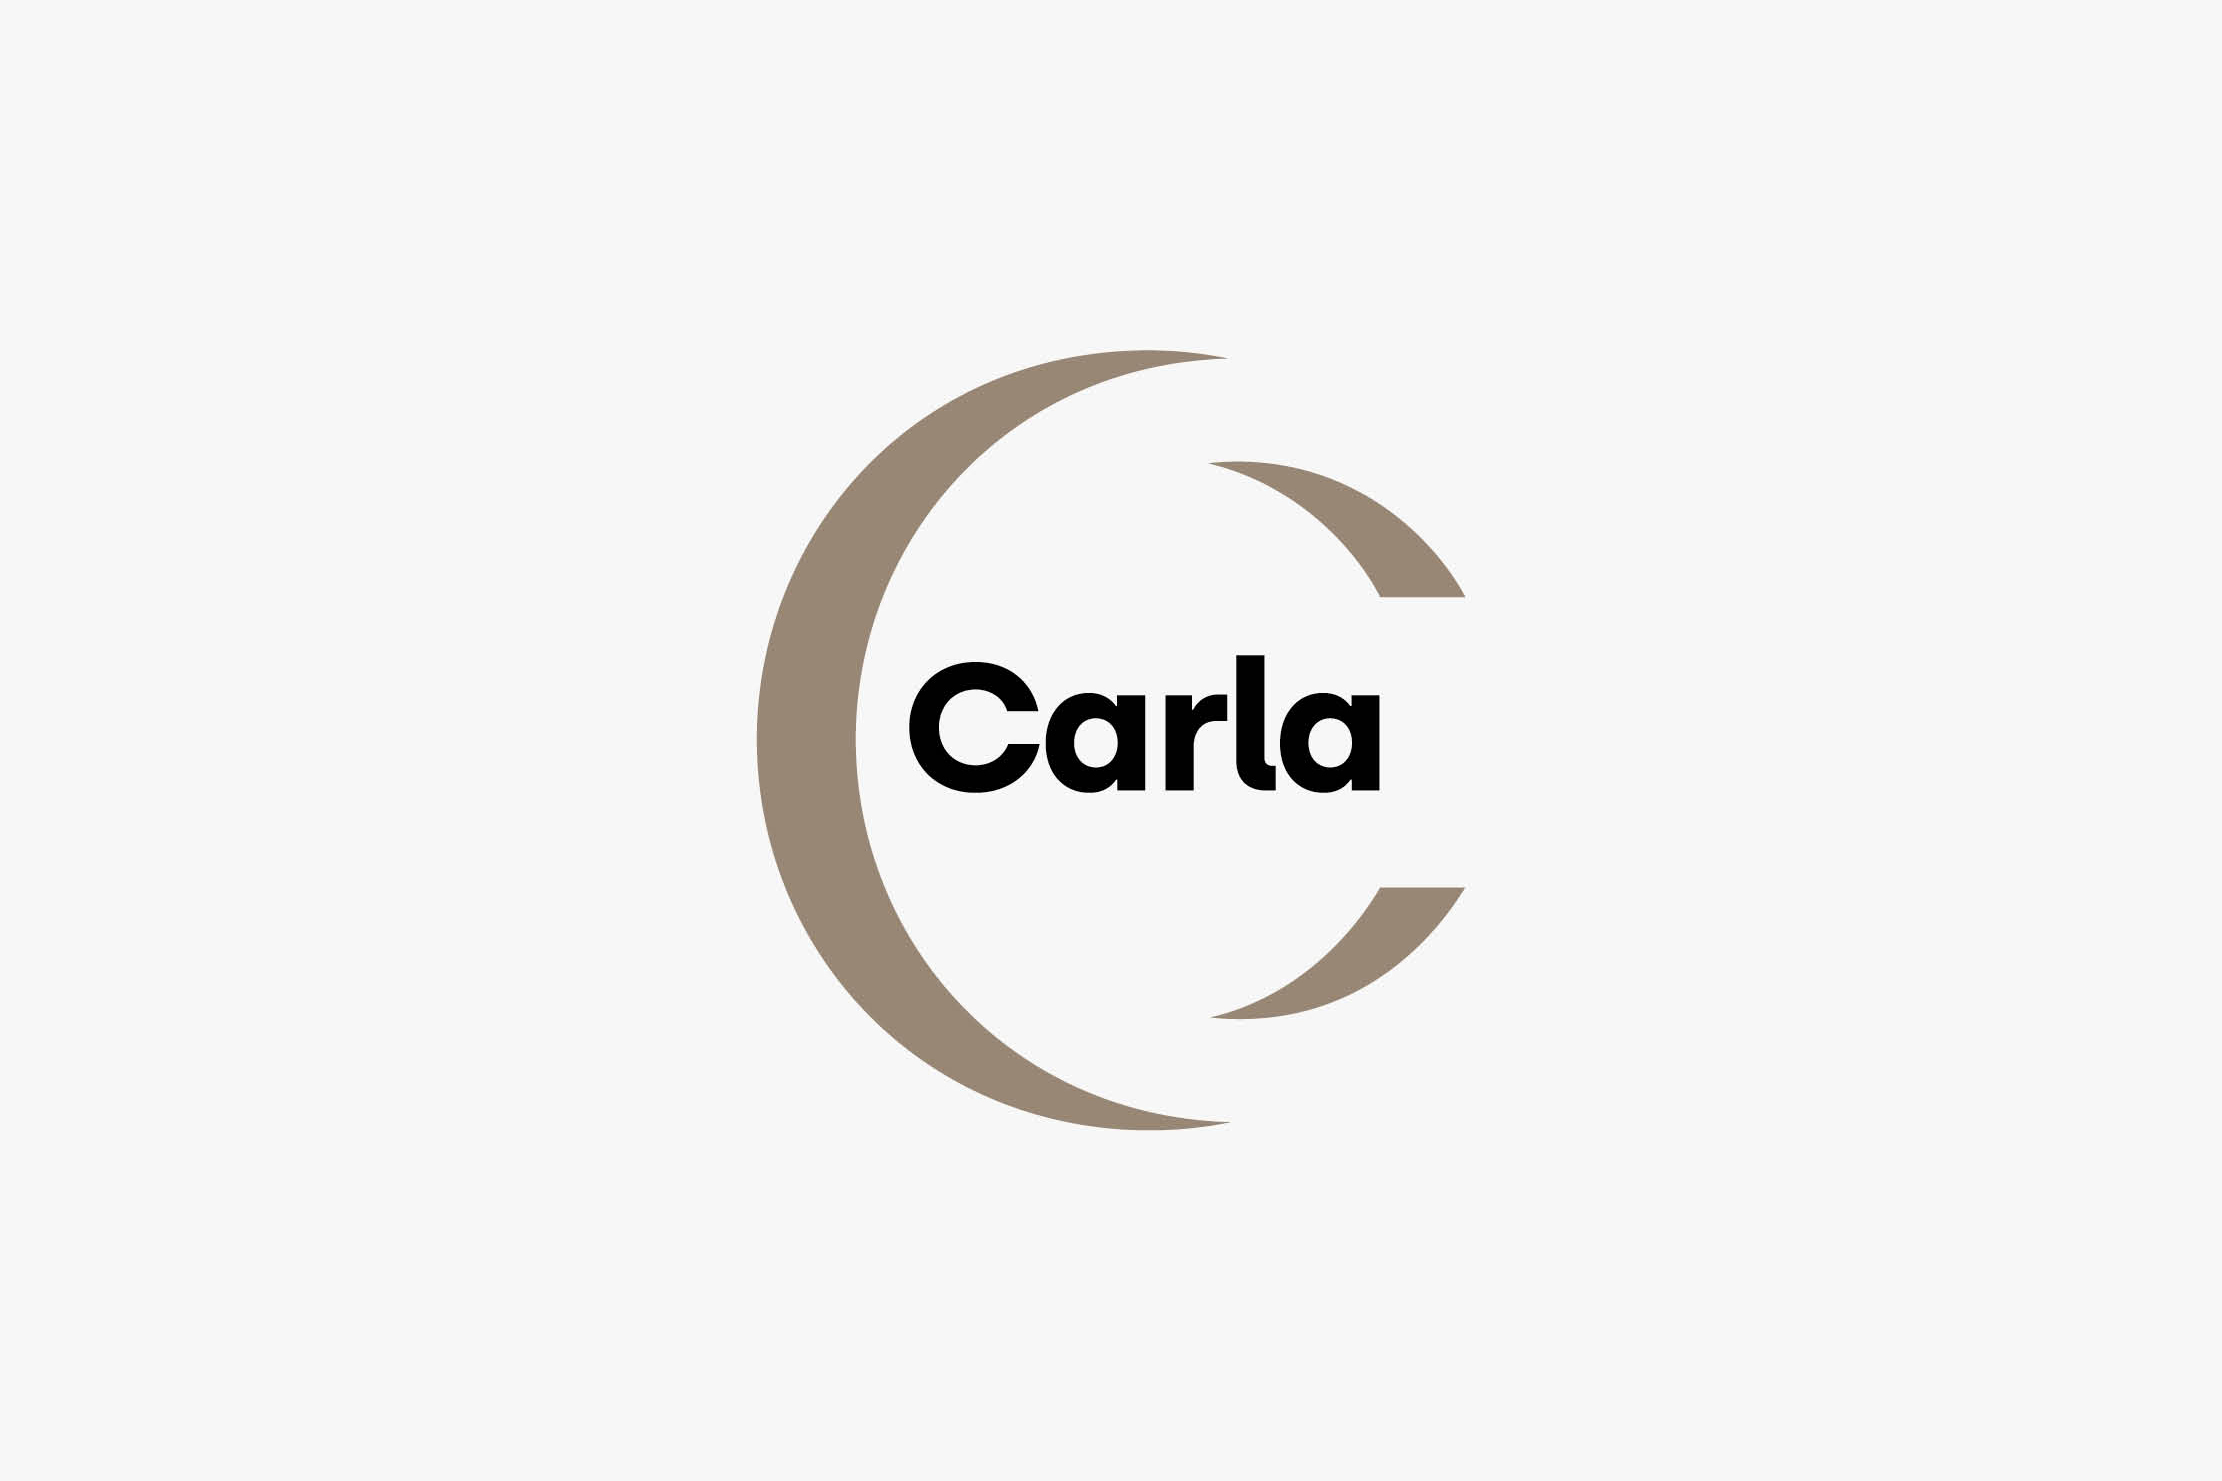 Carla-logo-Daniel-Cavalcanti-1